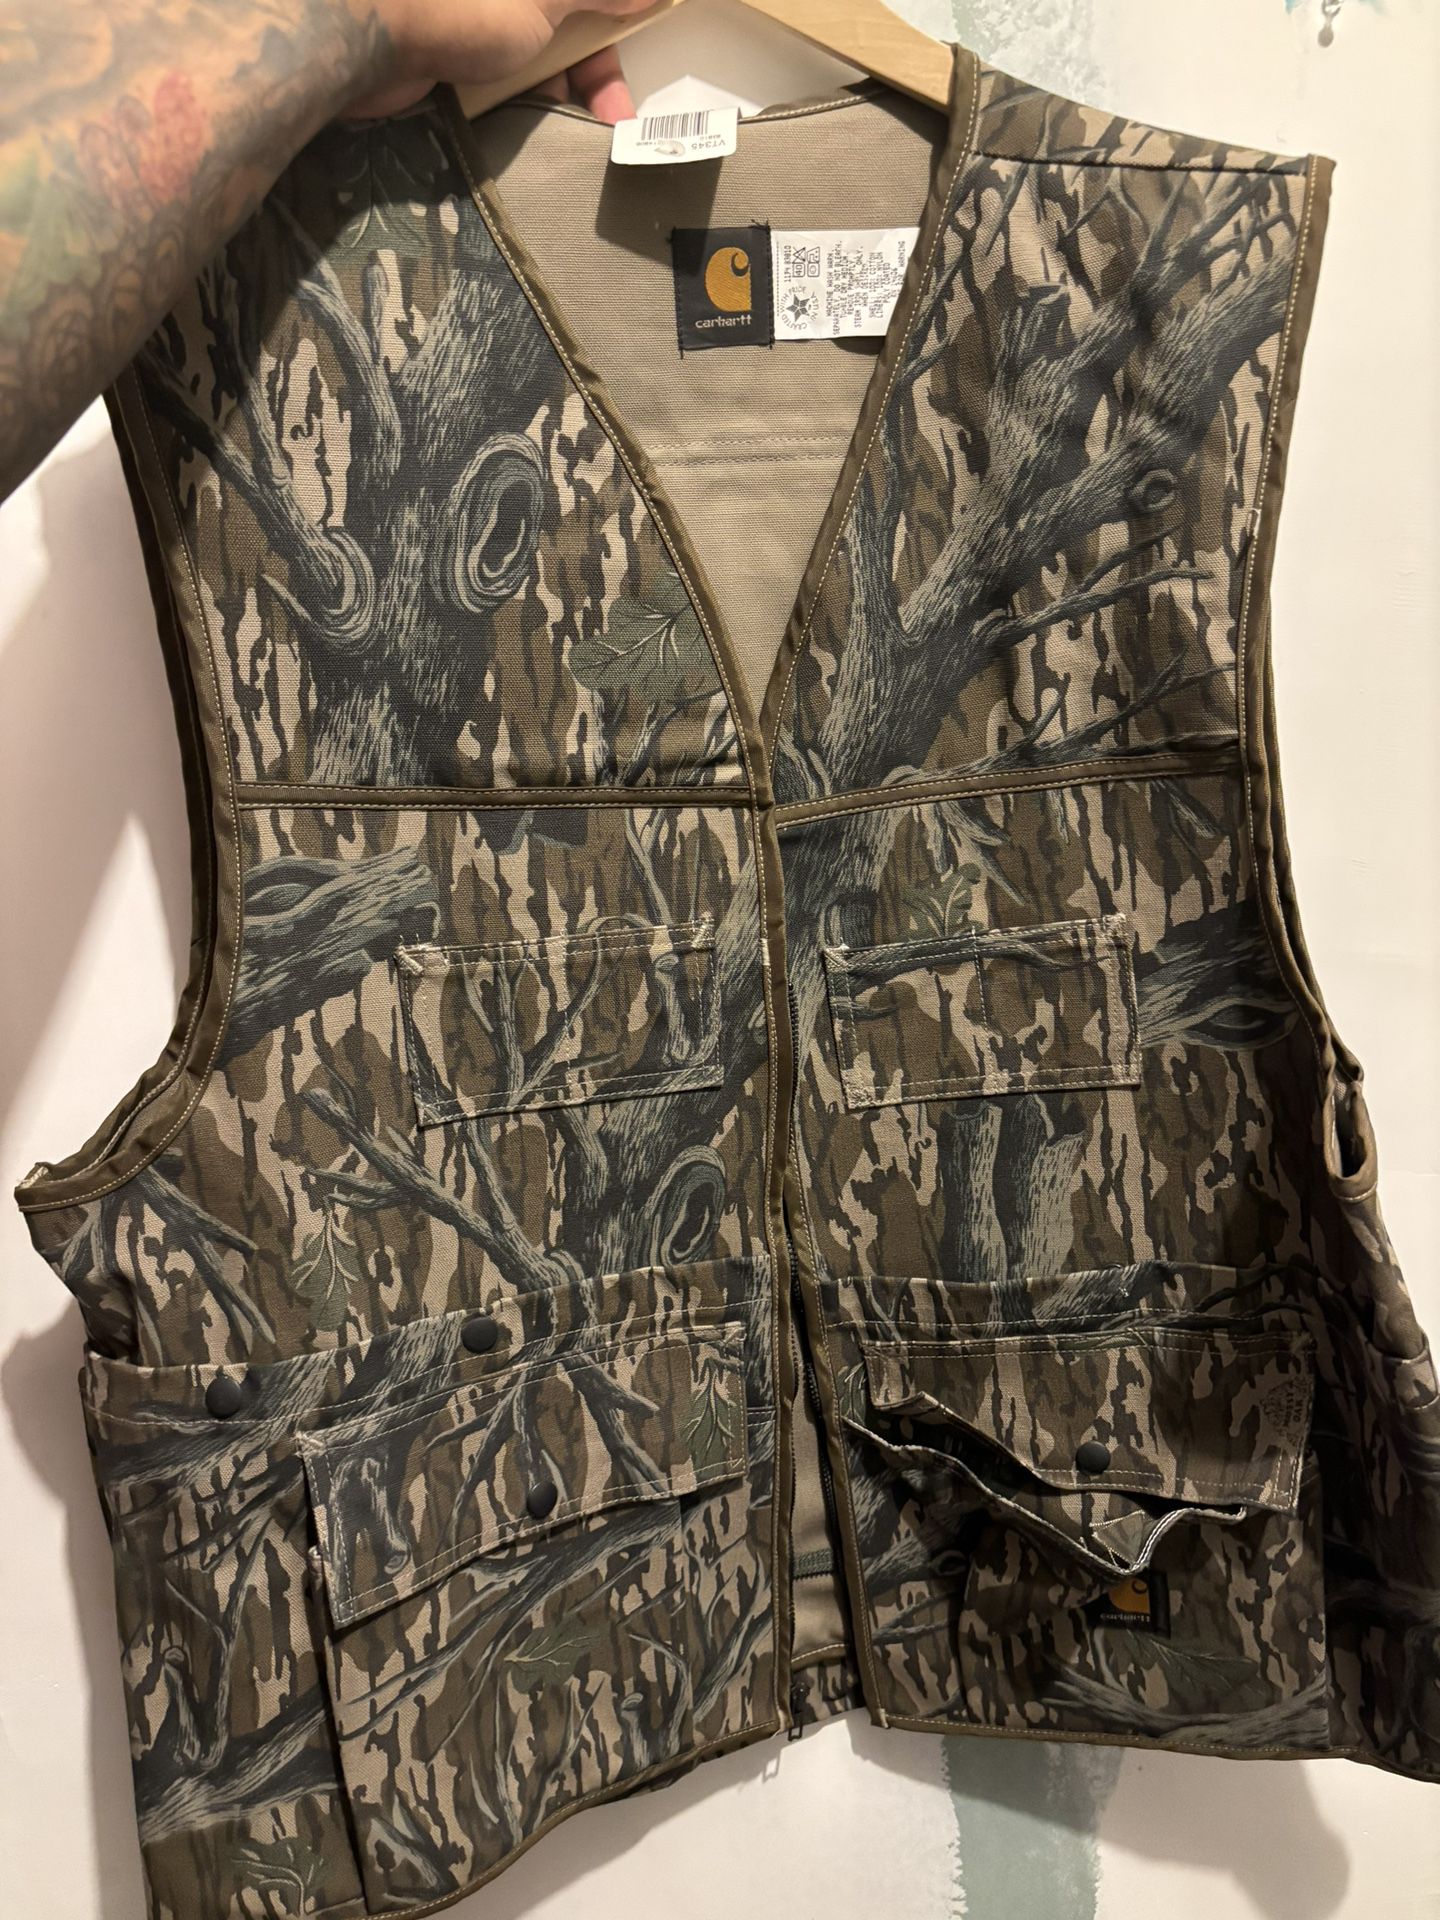 CARHEART hunting Vest!